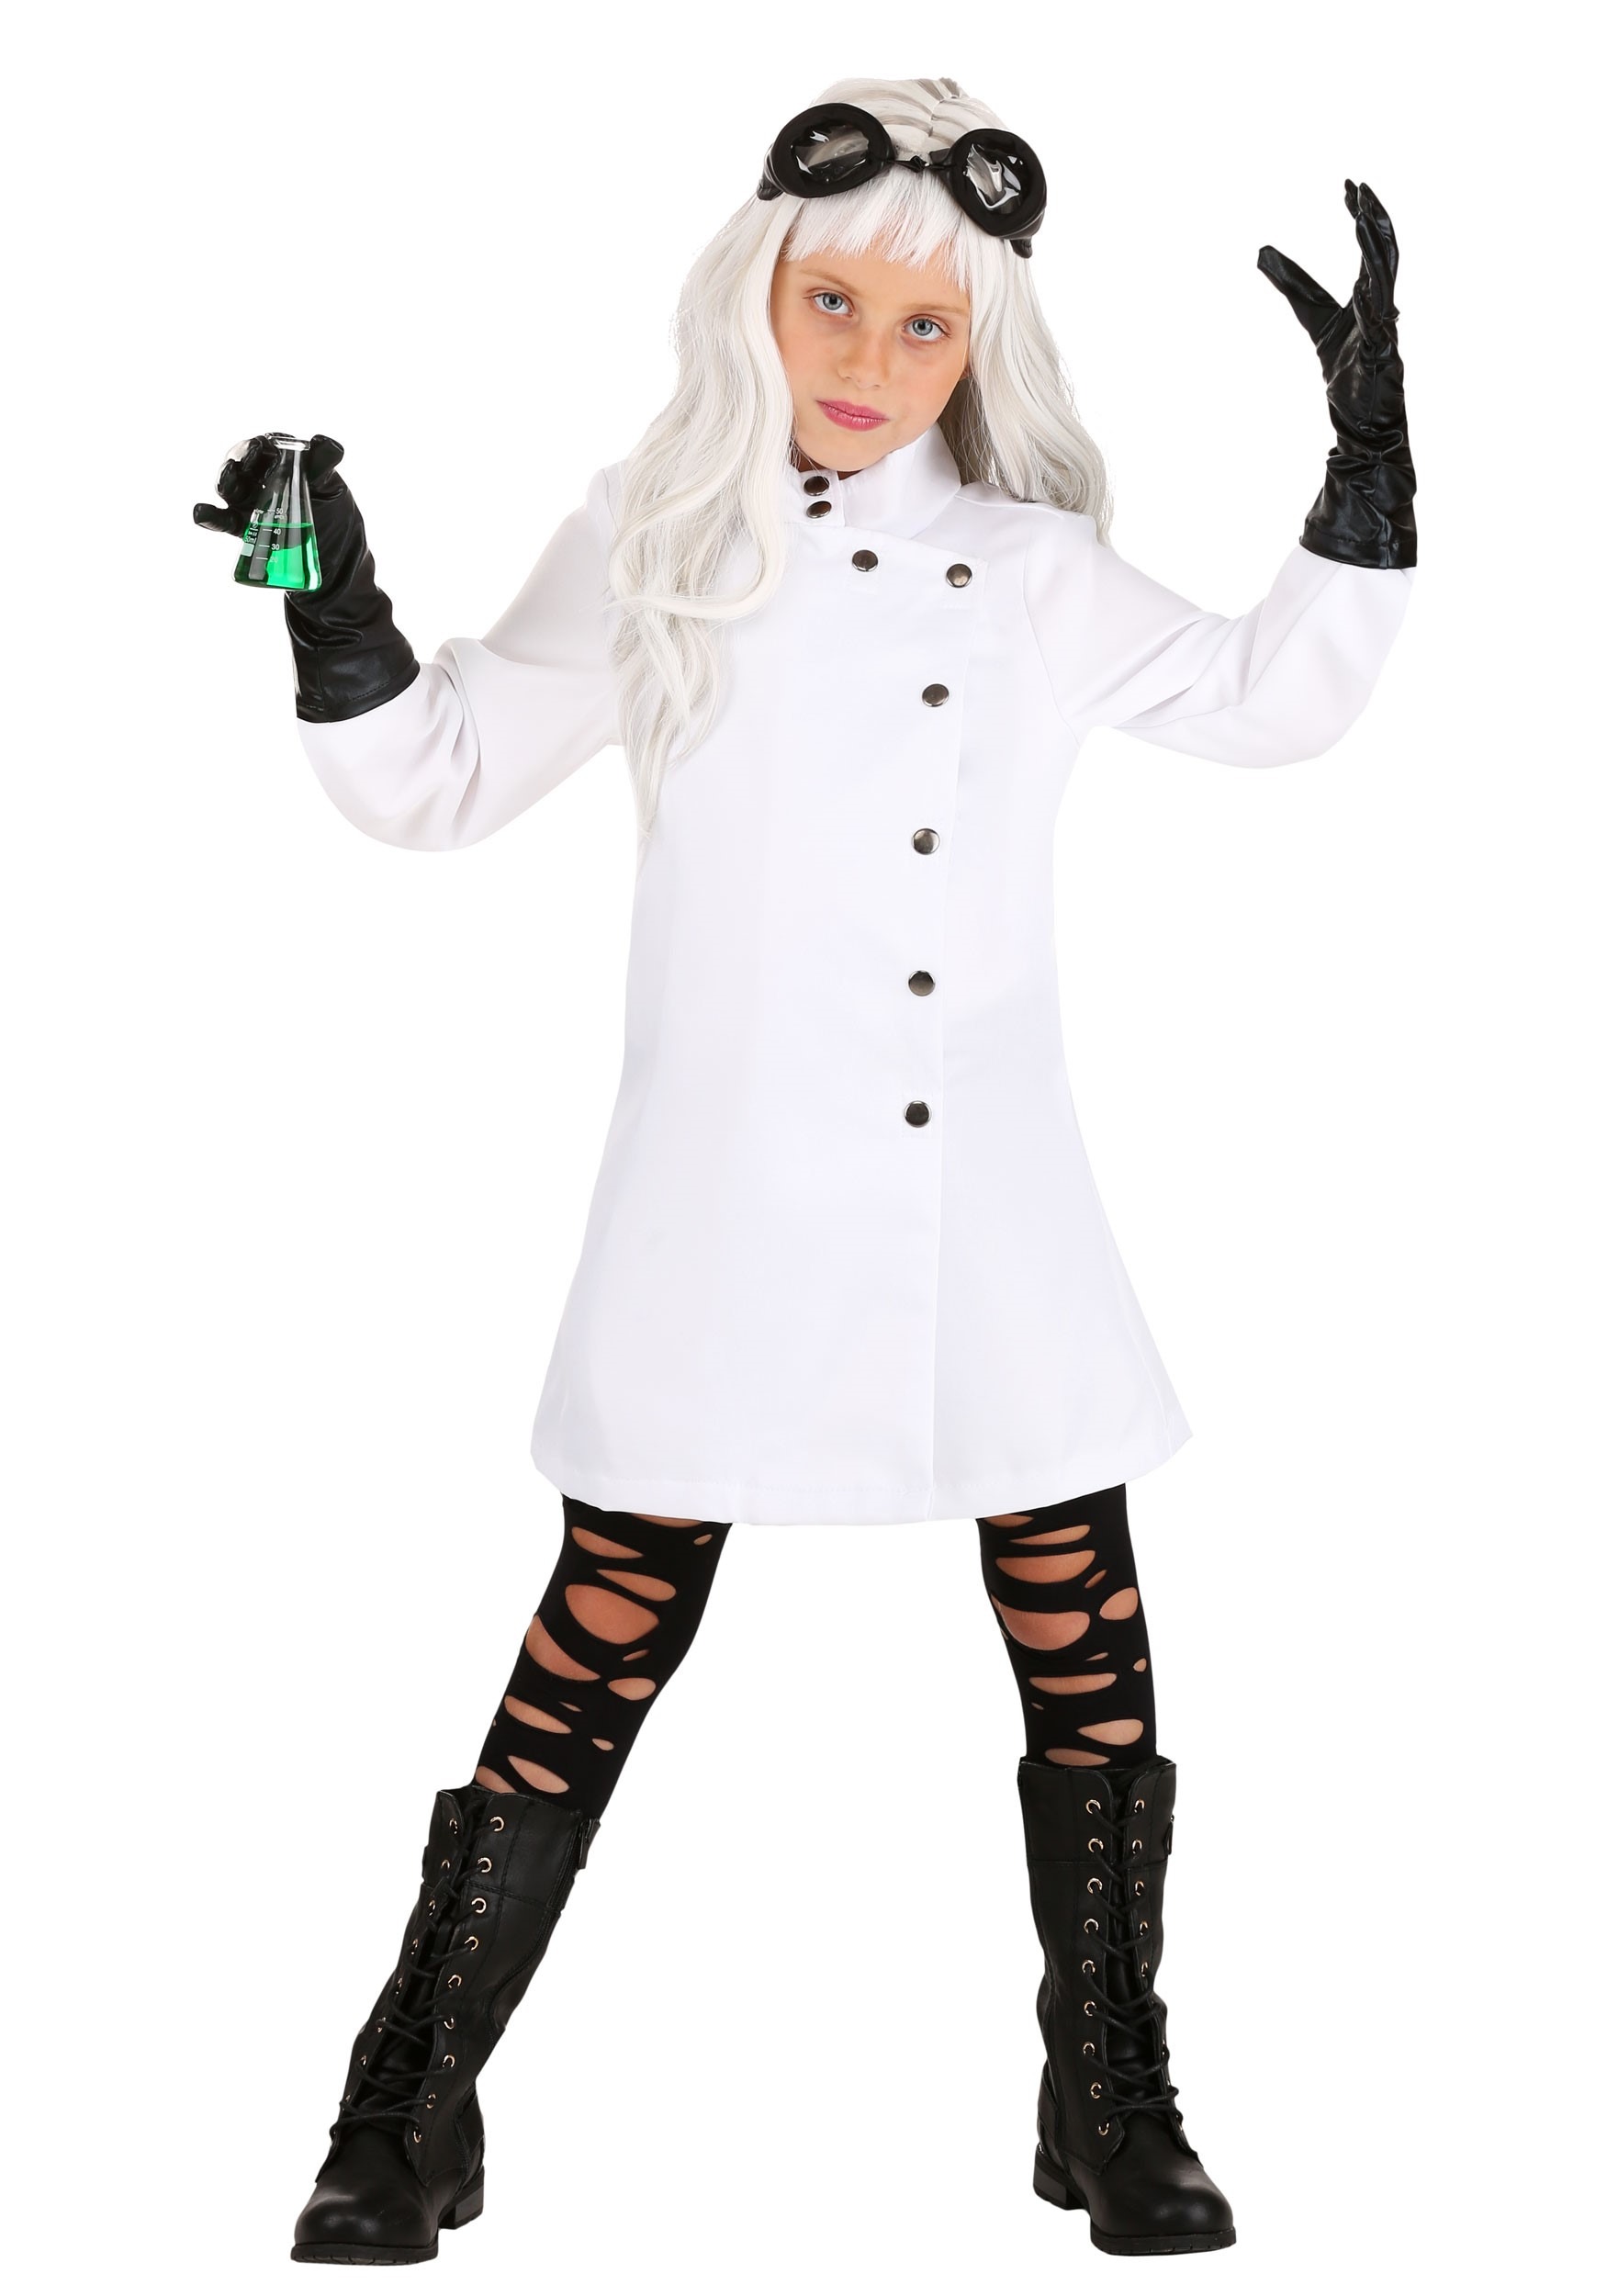 Photos - Fancy Dress MAD FUN Costumes Exclusive  Scientist Kid's Dress Costume Black/White F 